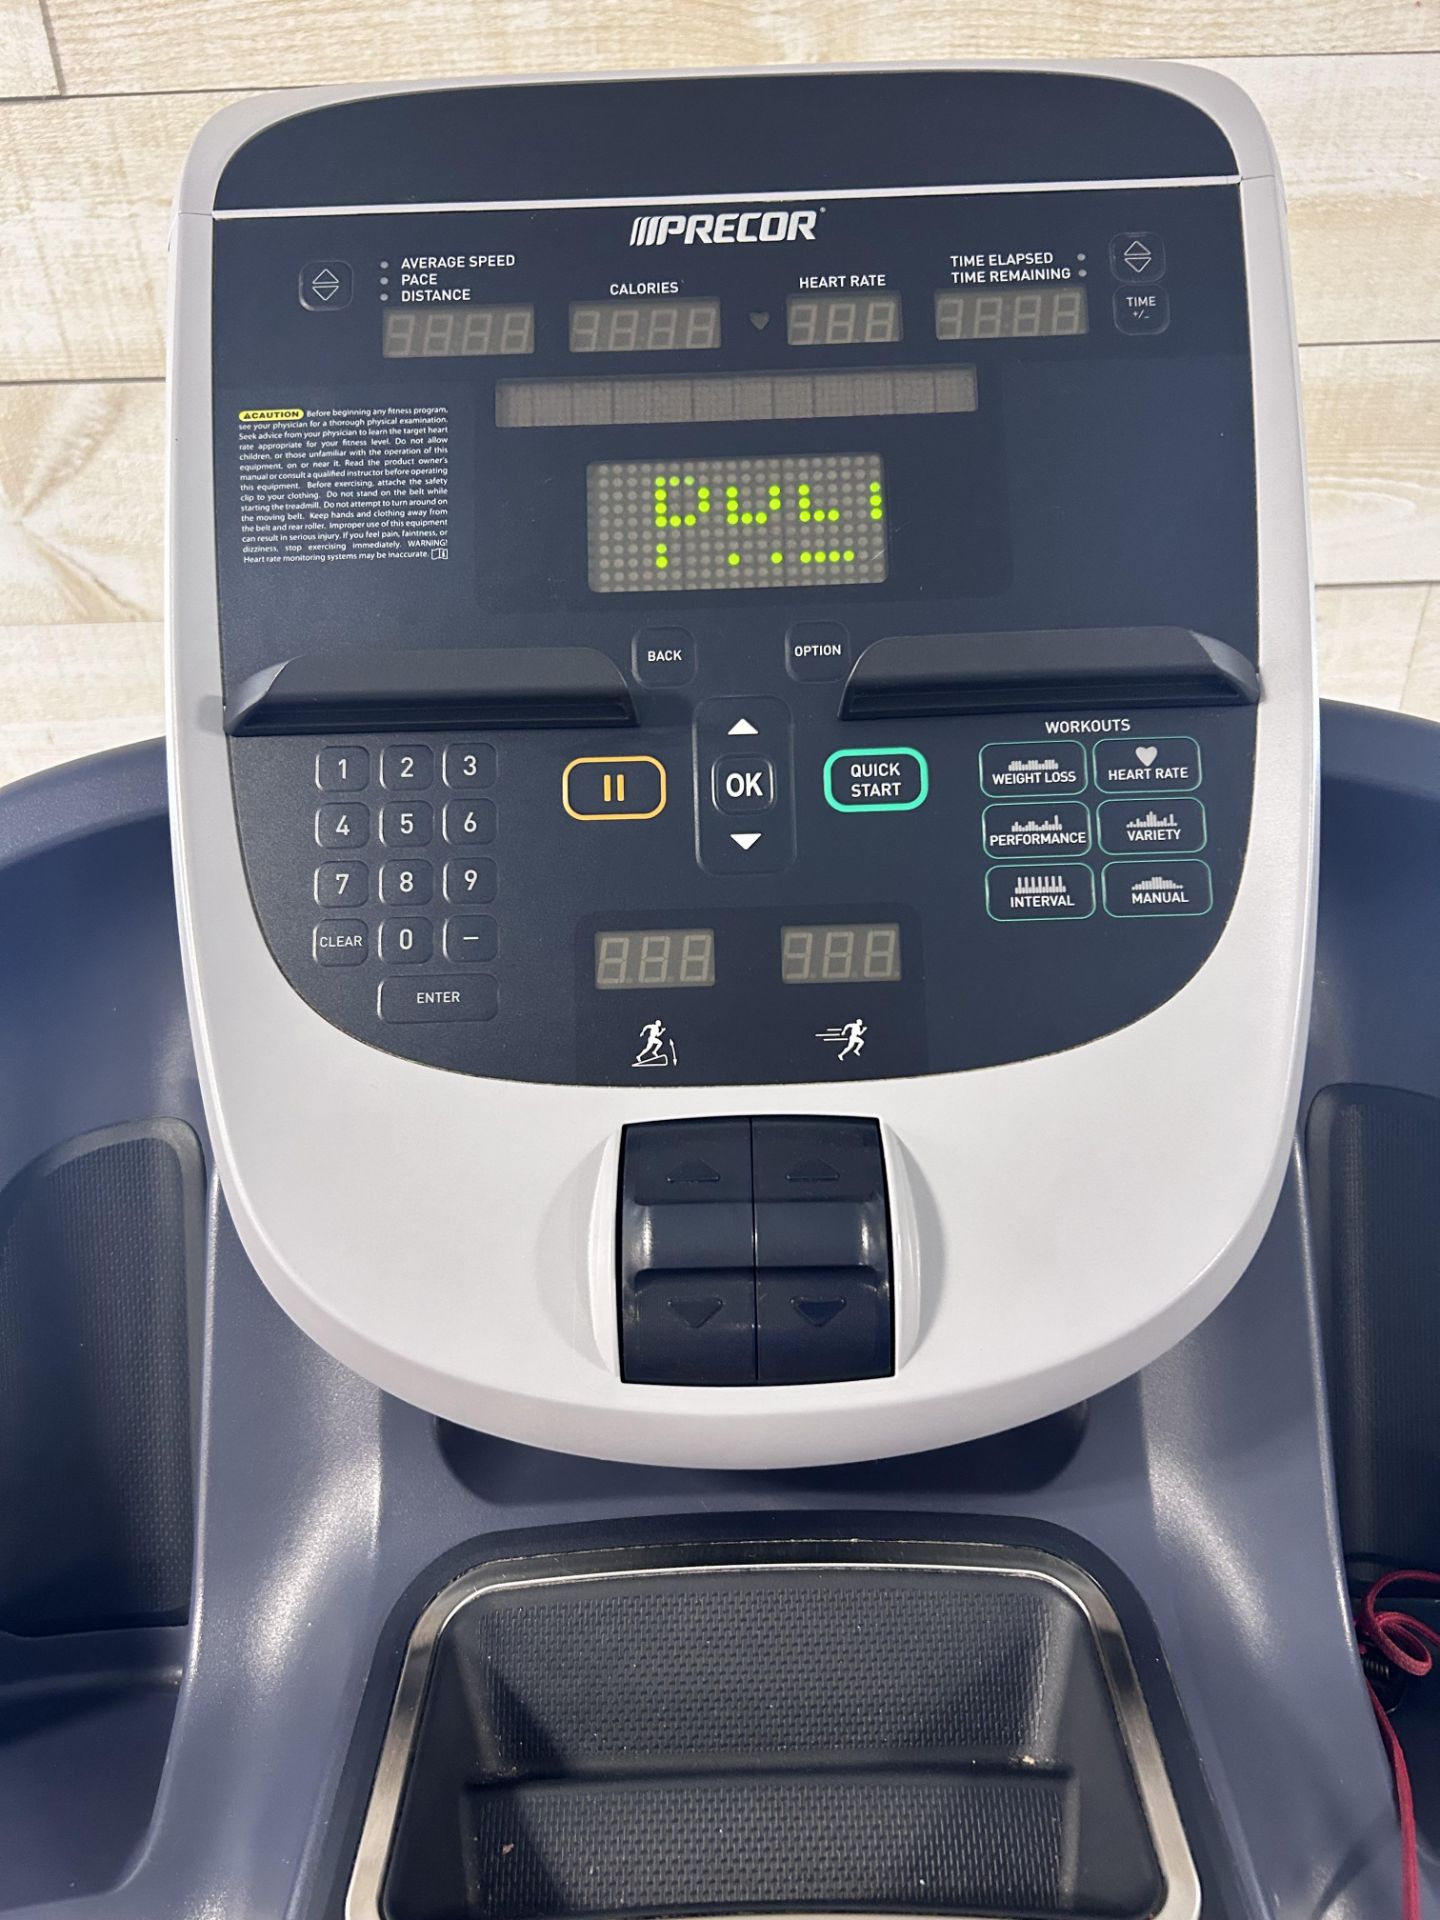 PRECOR mod. TRM 811 Treadmill with PRECOR P30 Console, ser. AGNBJ08140012 - Image 2 of 4